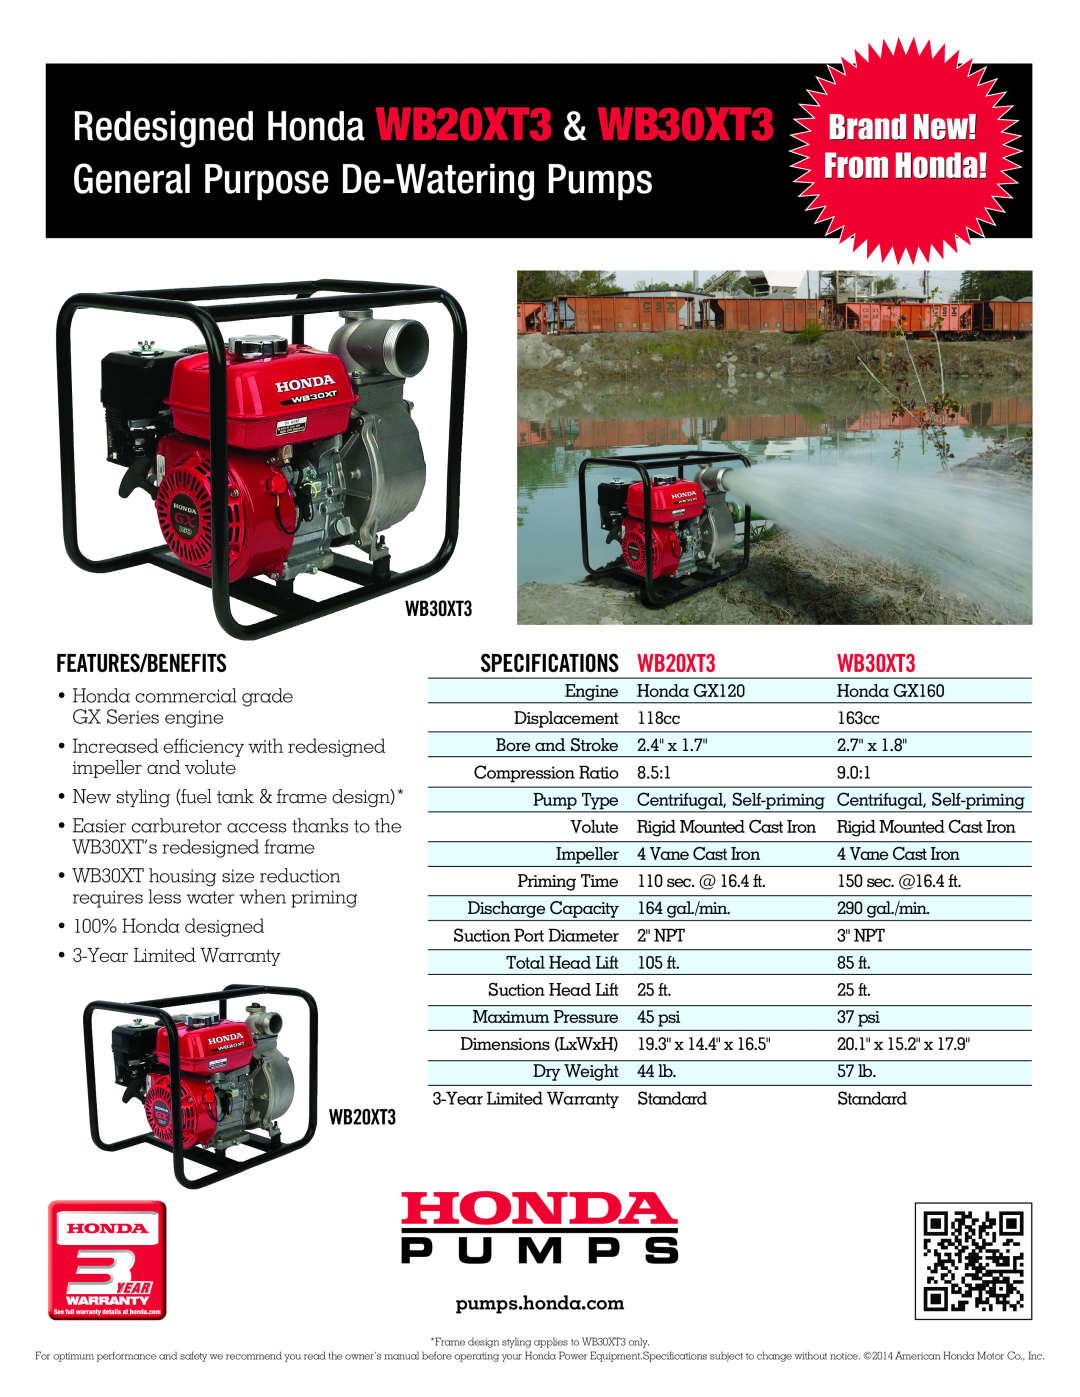 Honda Power Equipment 660200 specifications Redesigned Honda WB20XT3 & WB30XT3 General Purpose De-Watering Pumps 